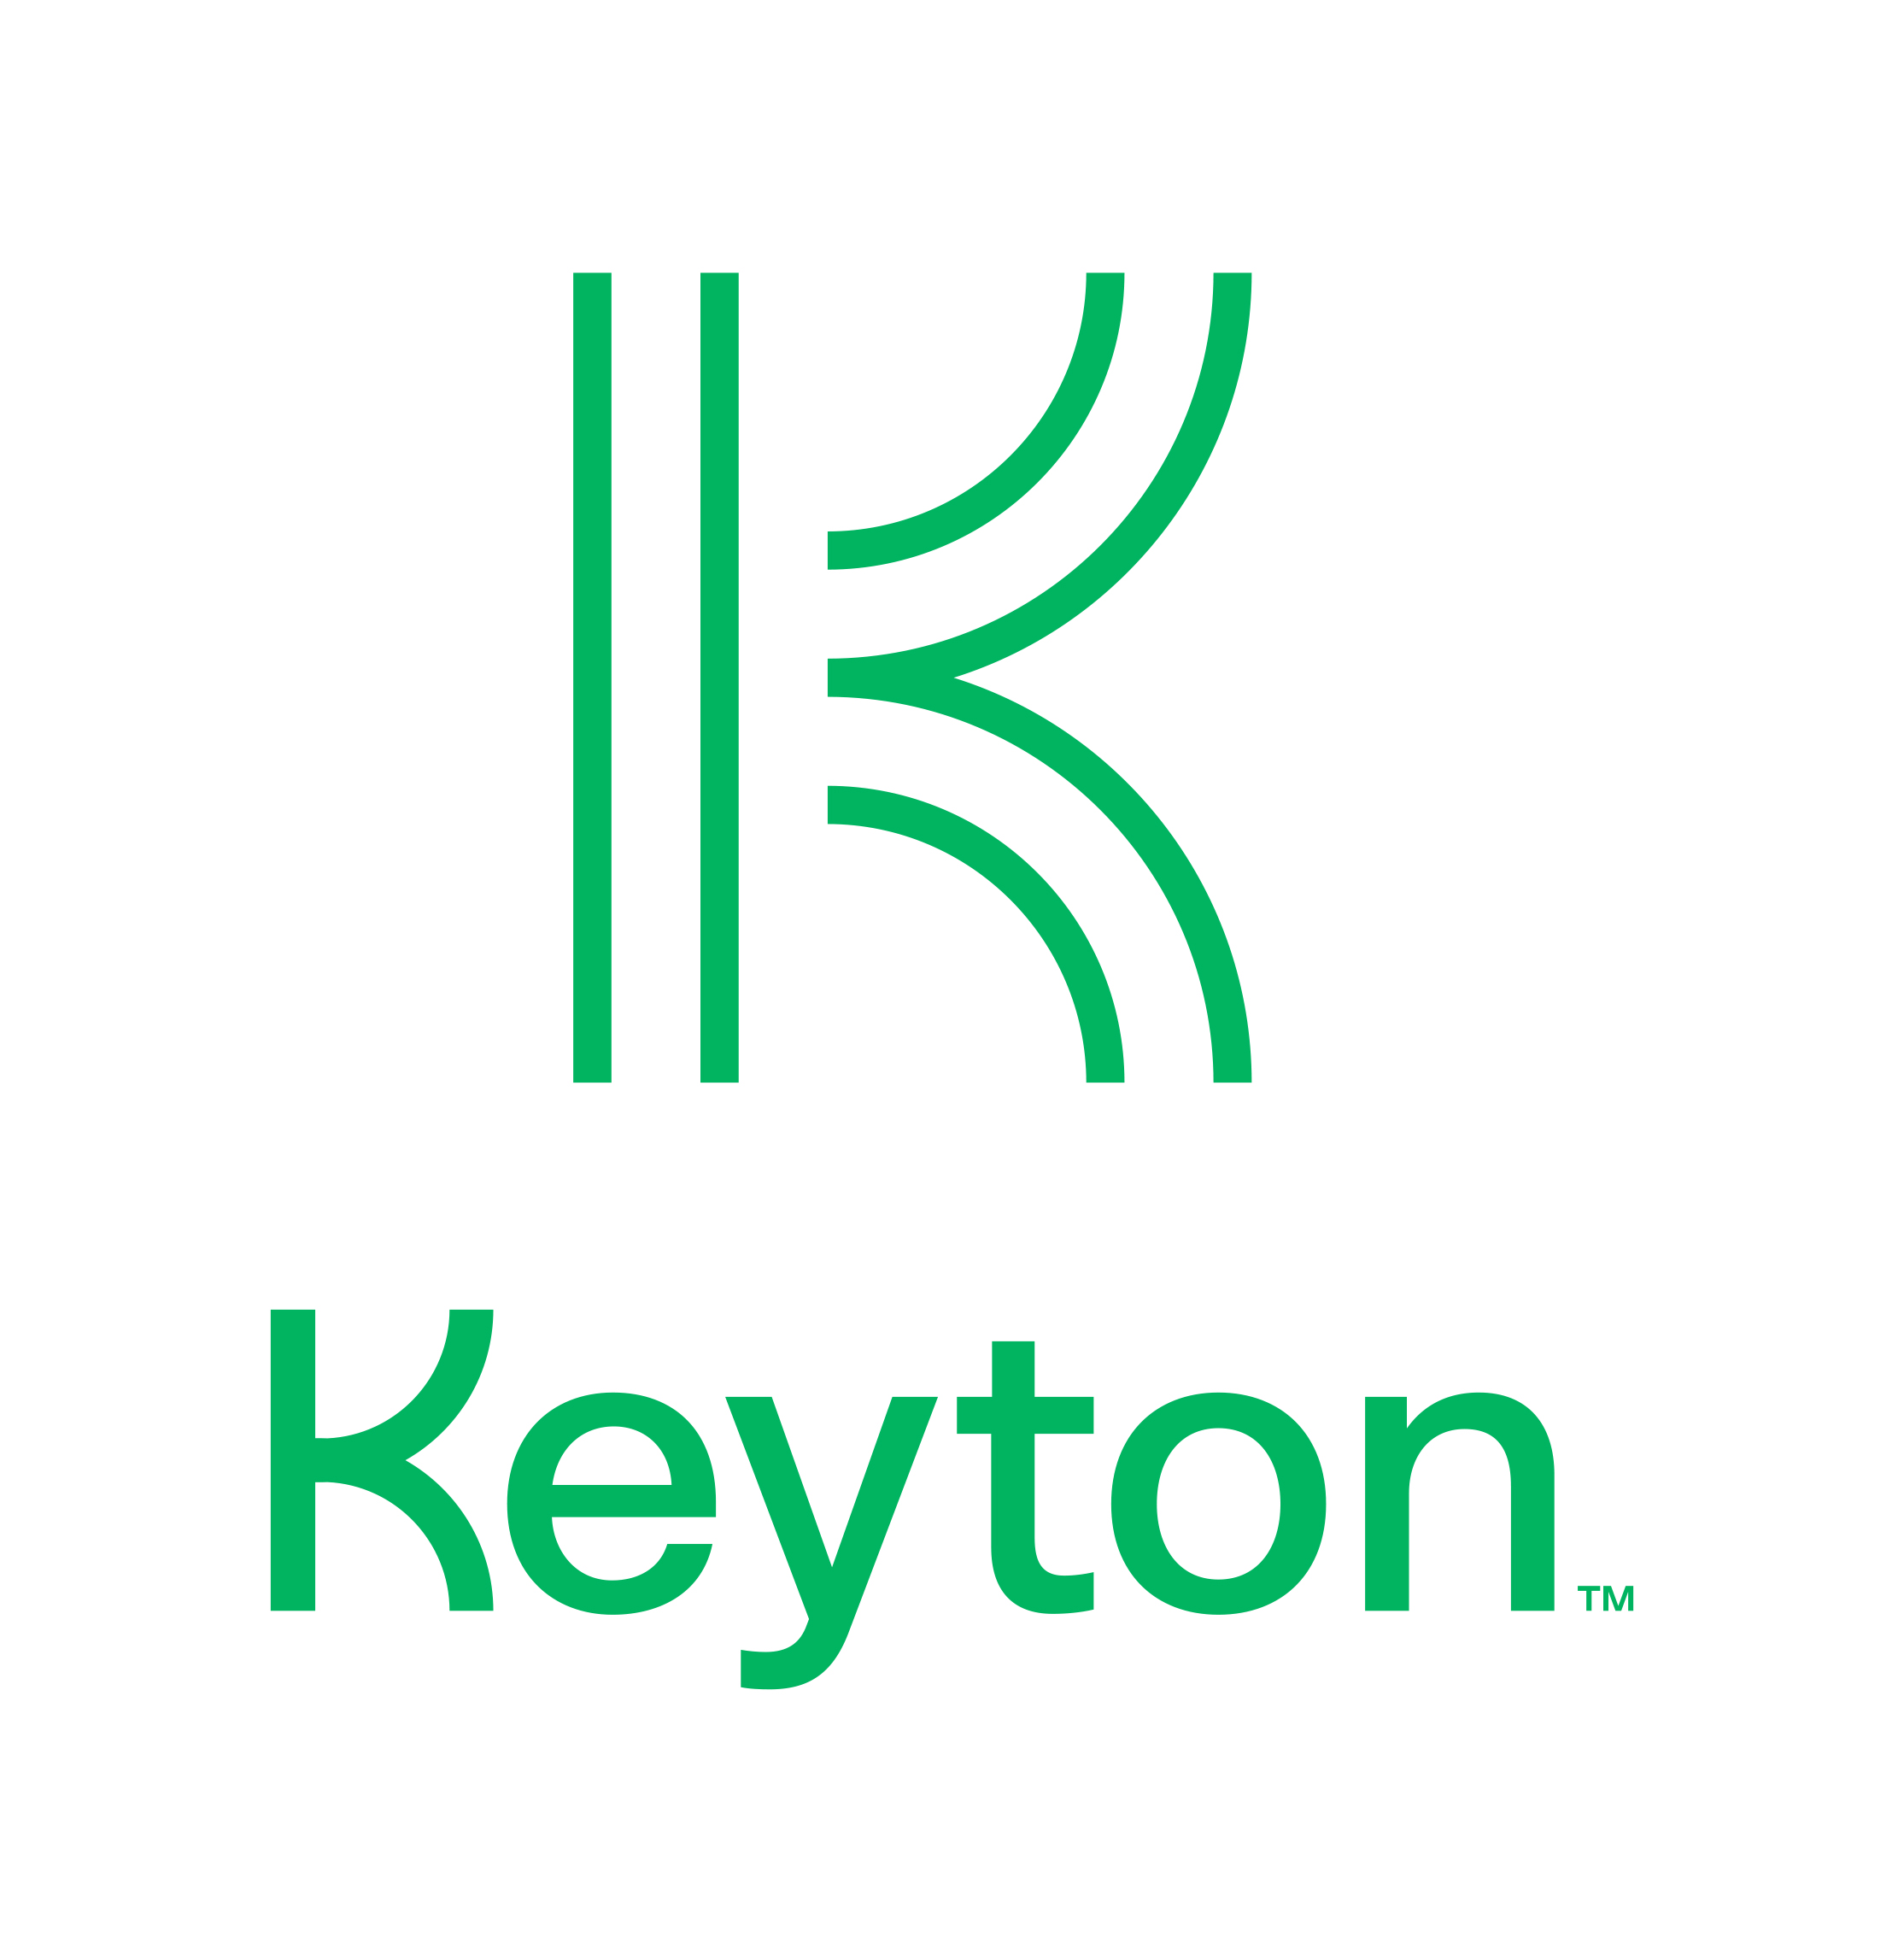 Keyton operator for retirement villages